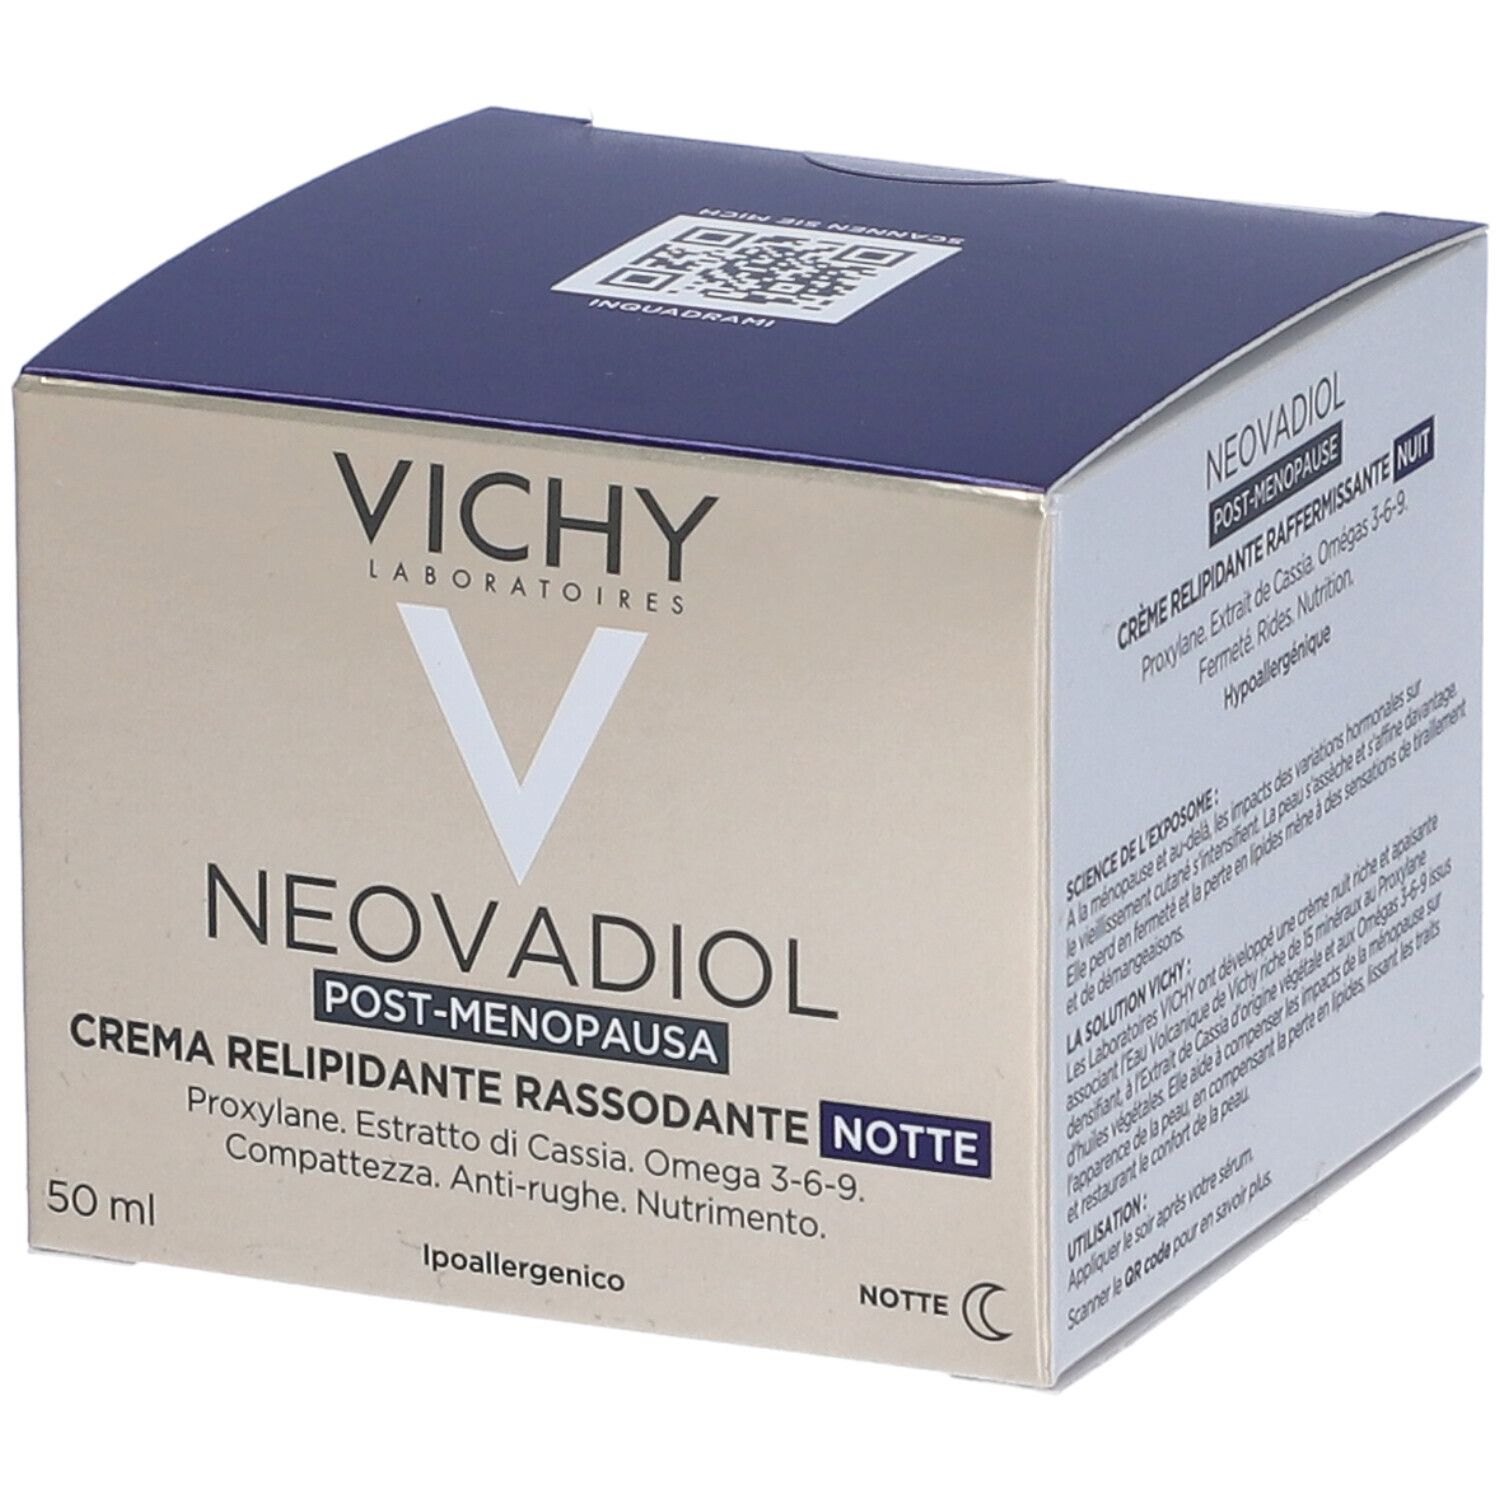 Vichy Neovadiol Post-Menopausa Crema Notte Relipidante Rassodante 50 ml